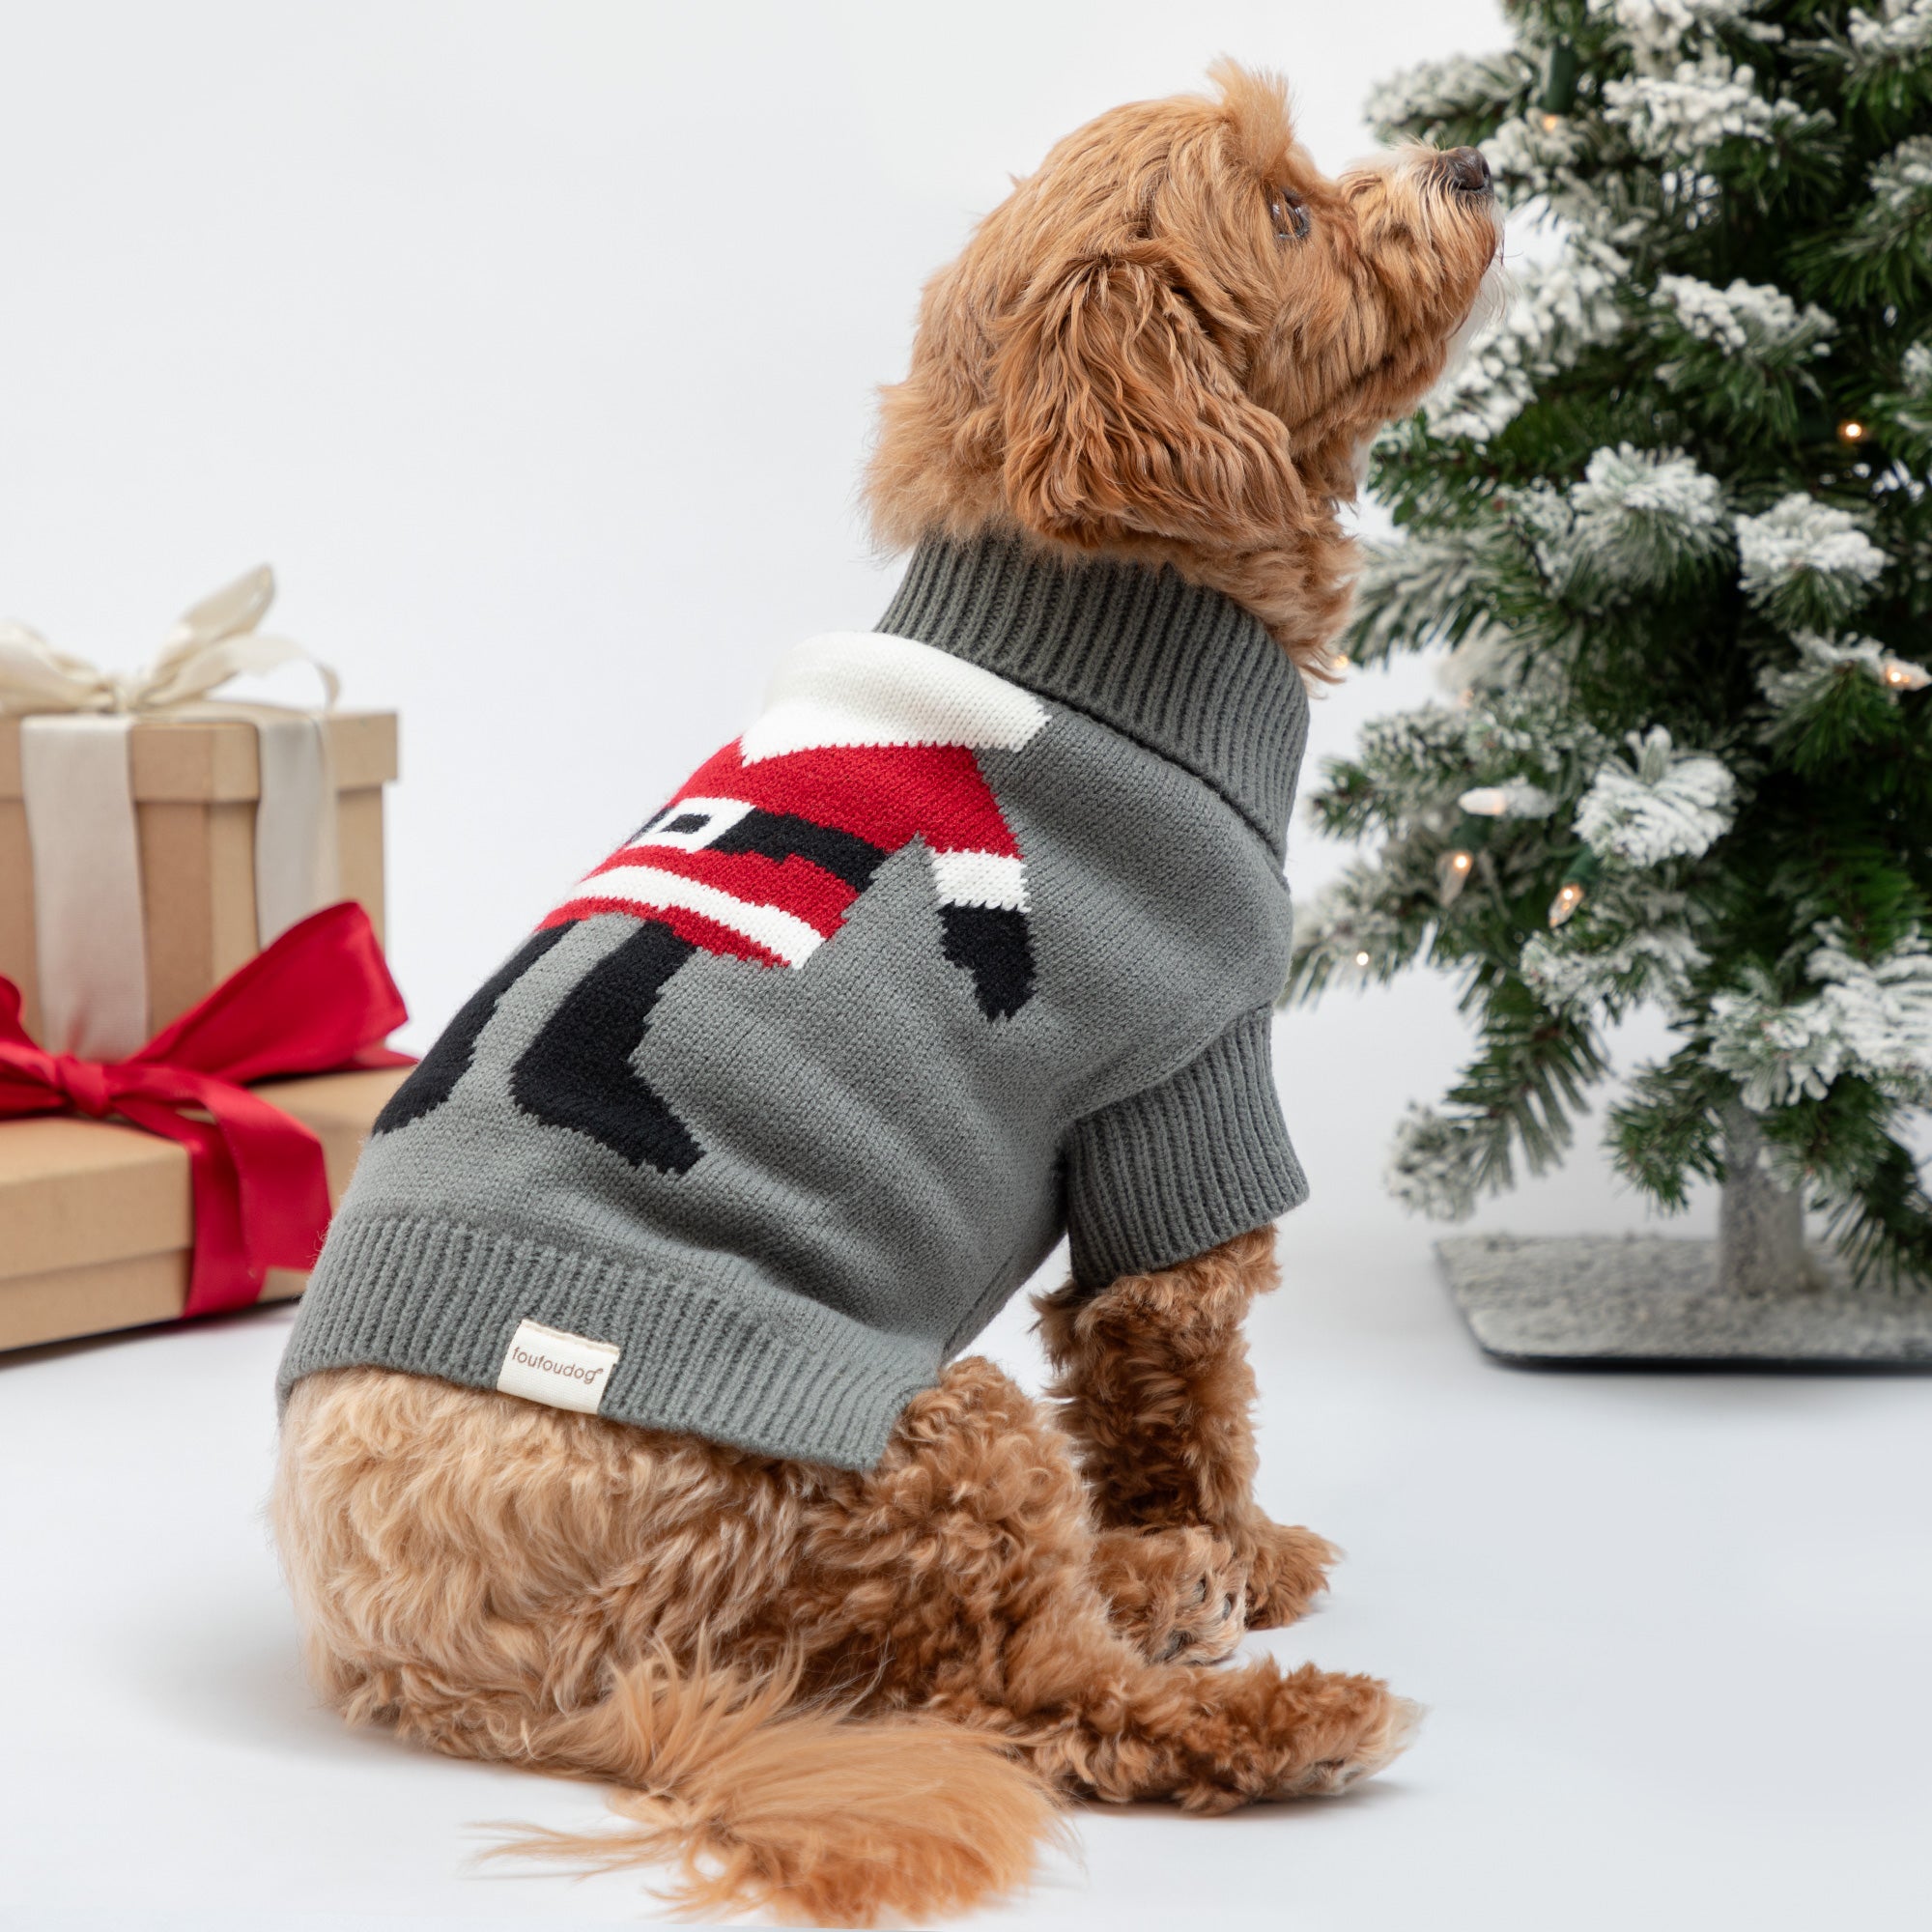 Cozy Christmas Pet Sweater - Santa - M